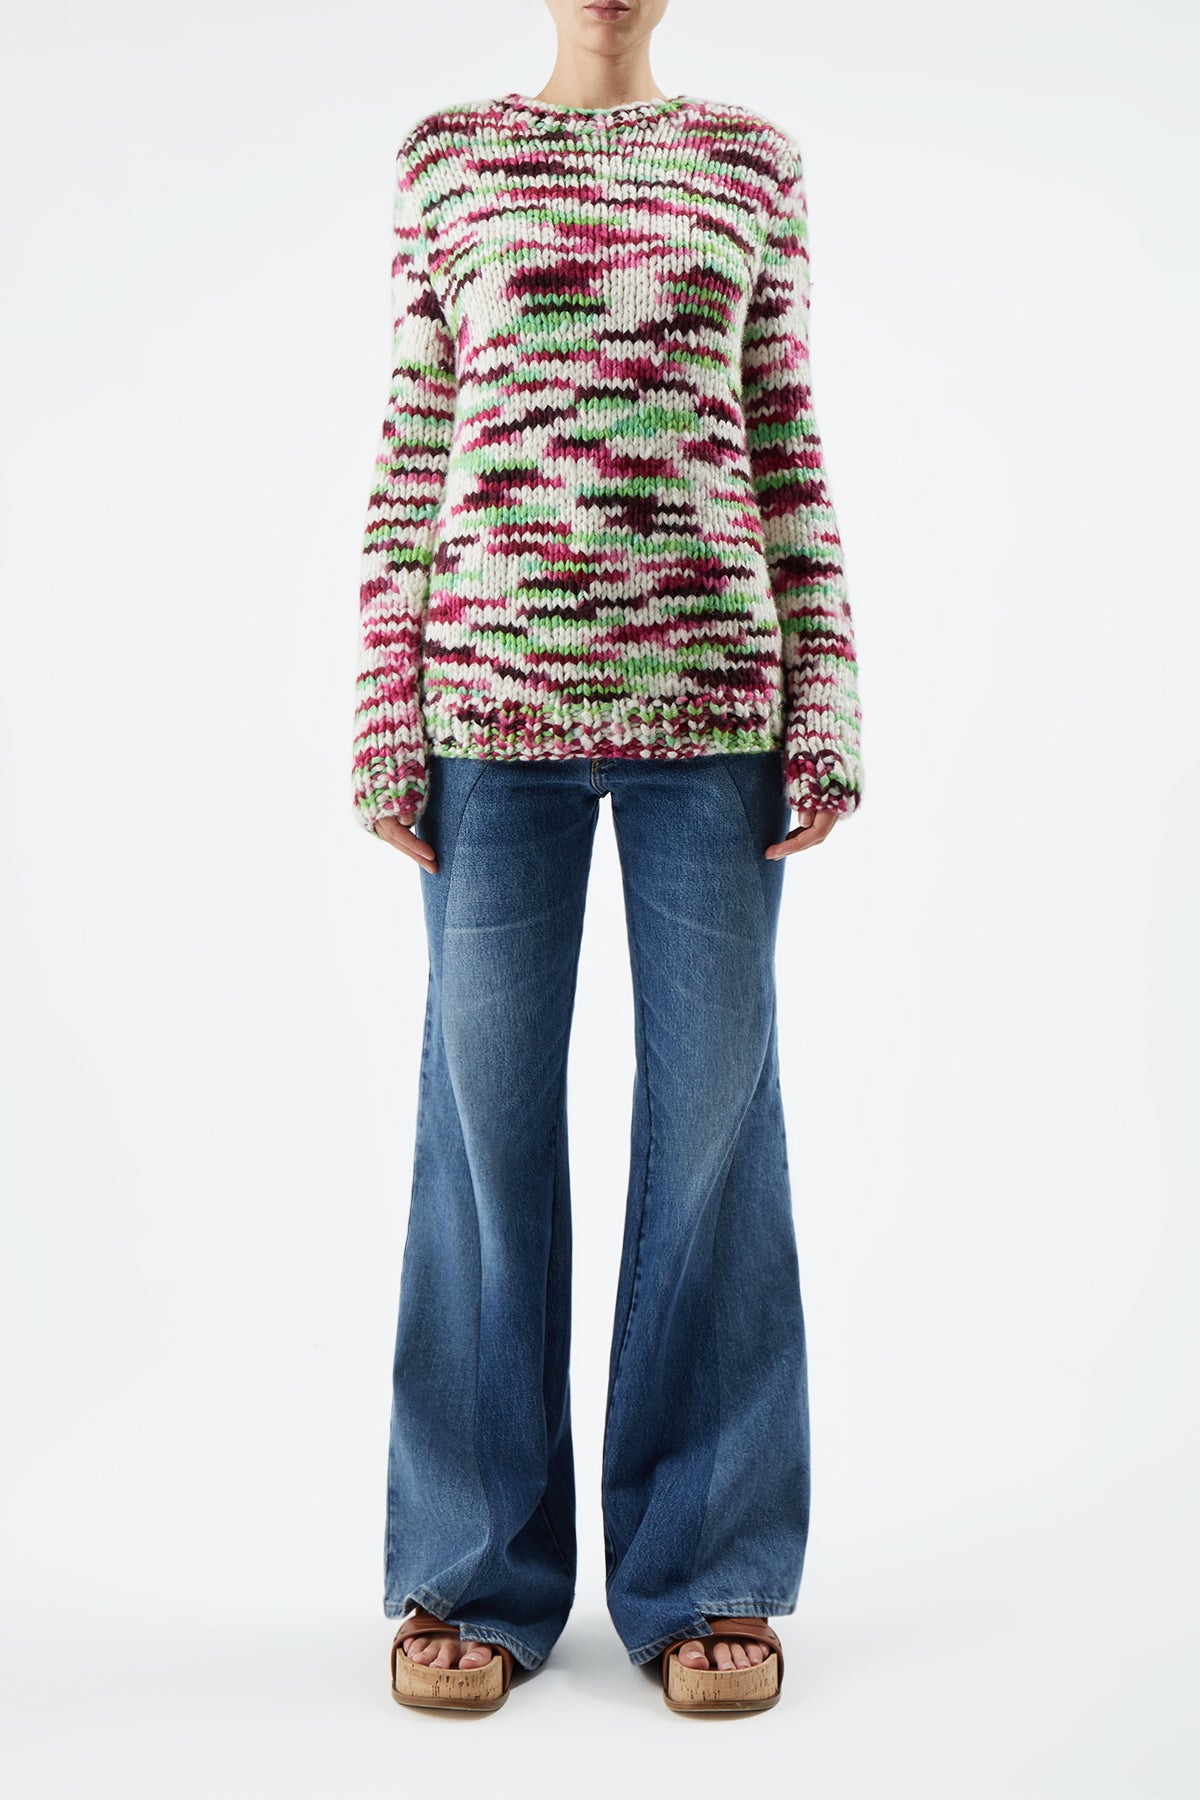 Lawrence Space Dye Knit Sweater in Jewel Multi Welfat Cashmere